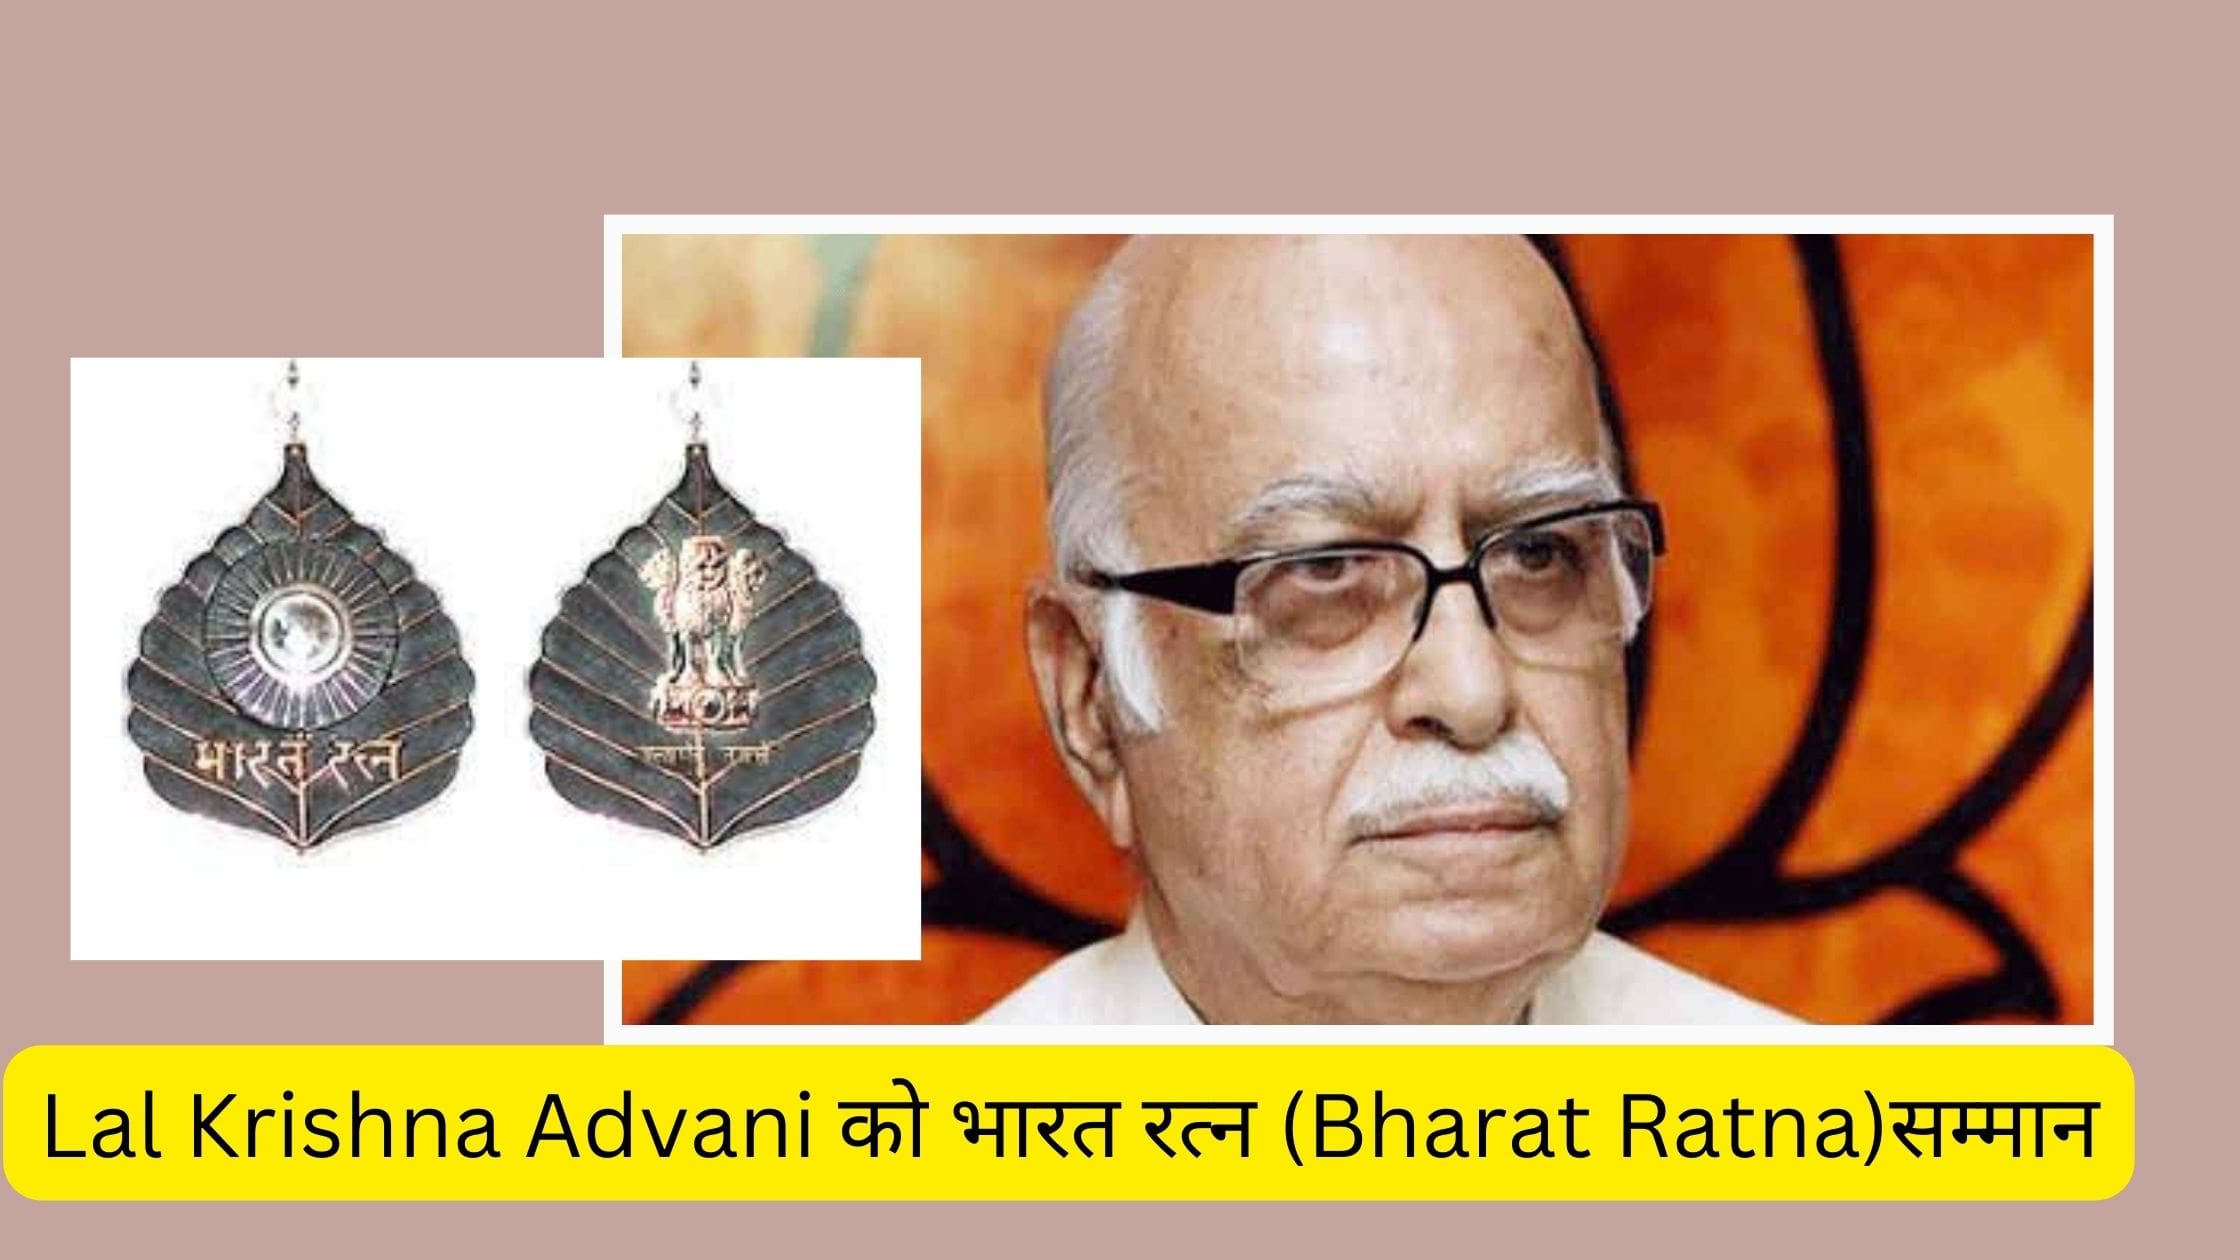 Bharat Ratna to Lalkrishan Advani